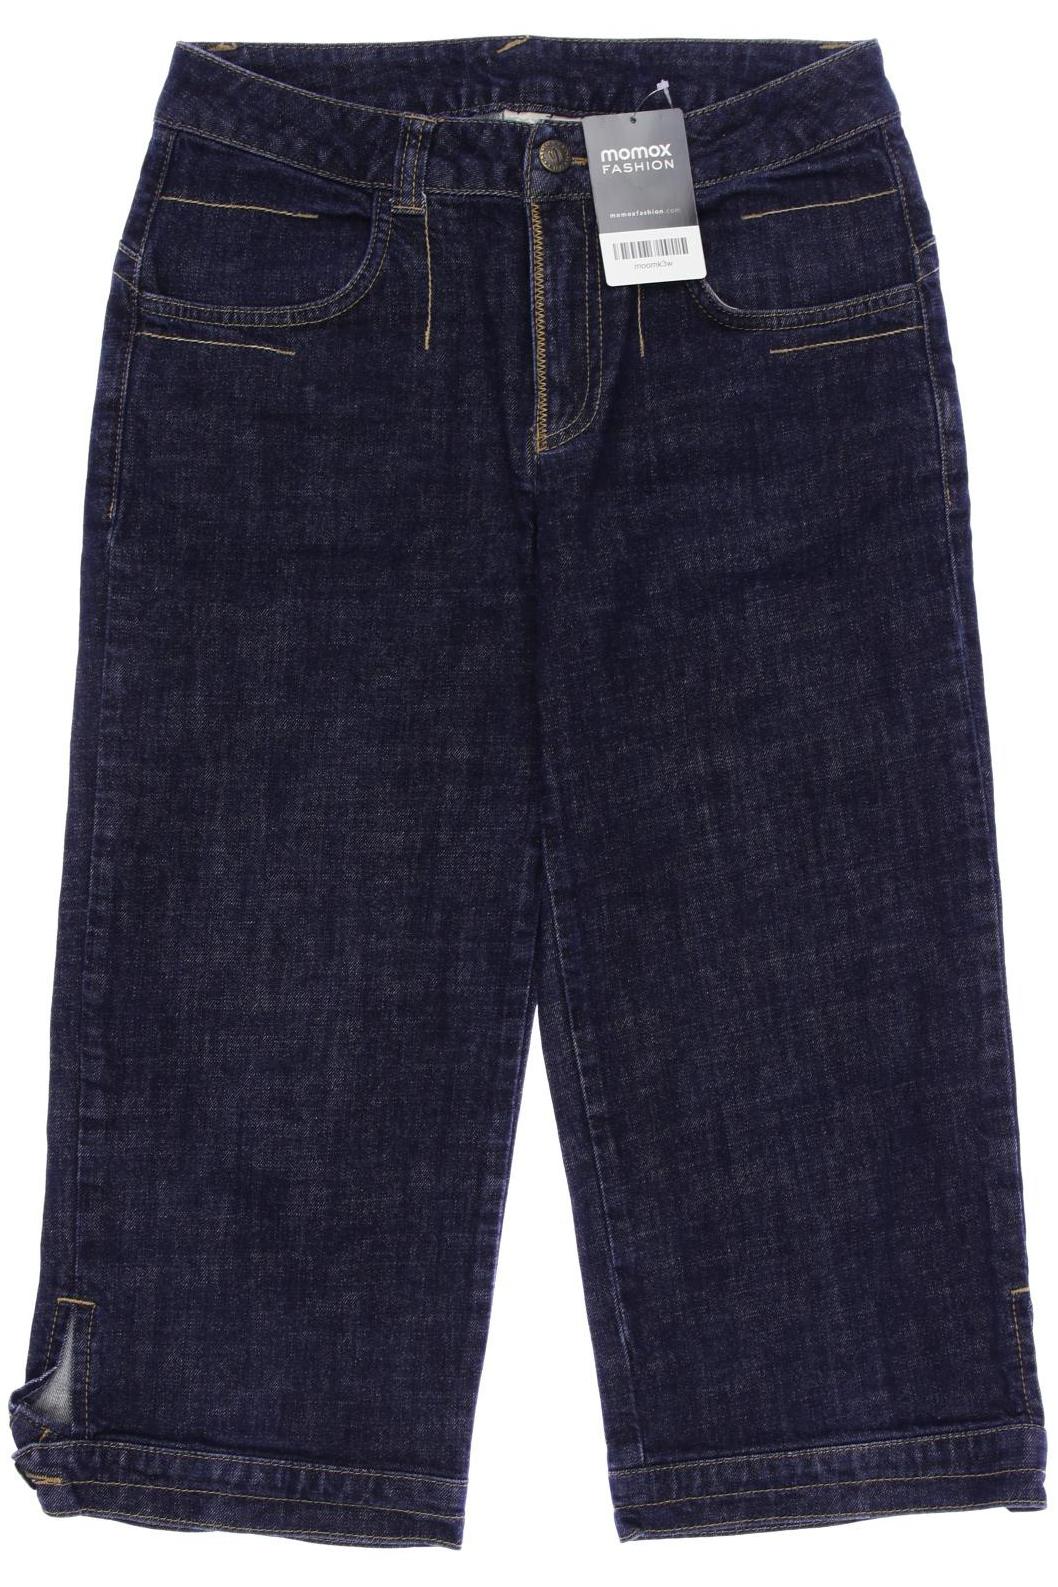 Maas Damen Jeans, marineblau, Gr. 36 von Maas